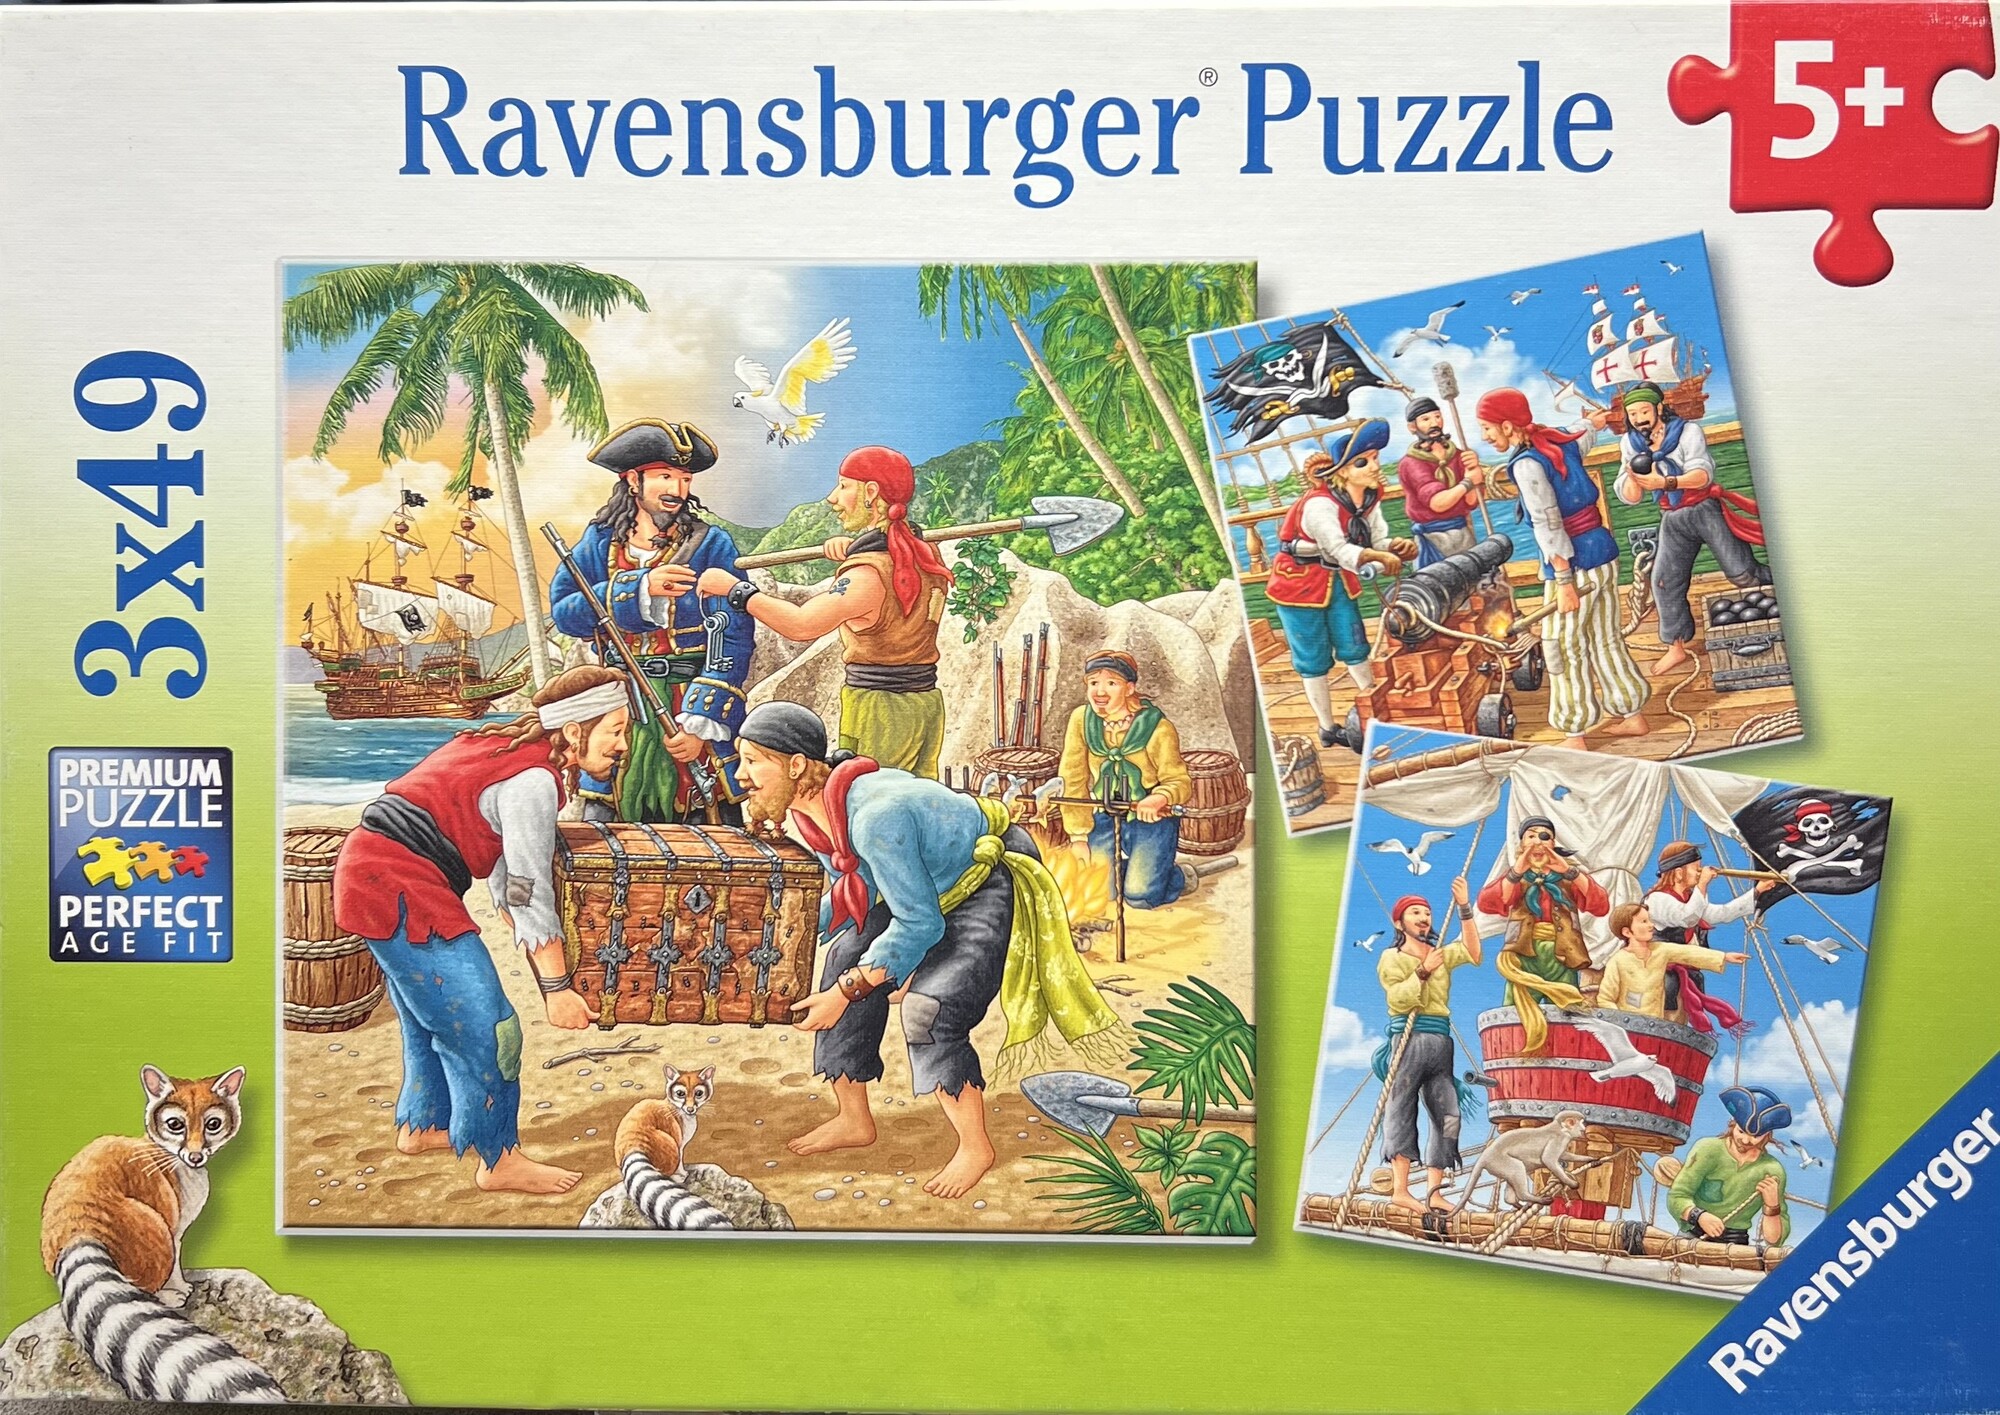 Pirate Ravensburger Puzzle, Green, Size: 49 Pcs